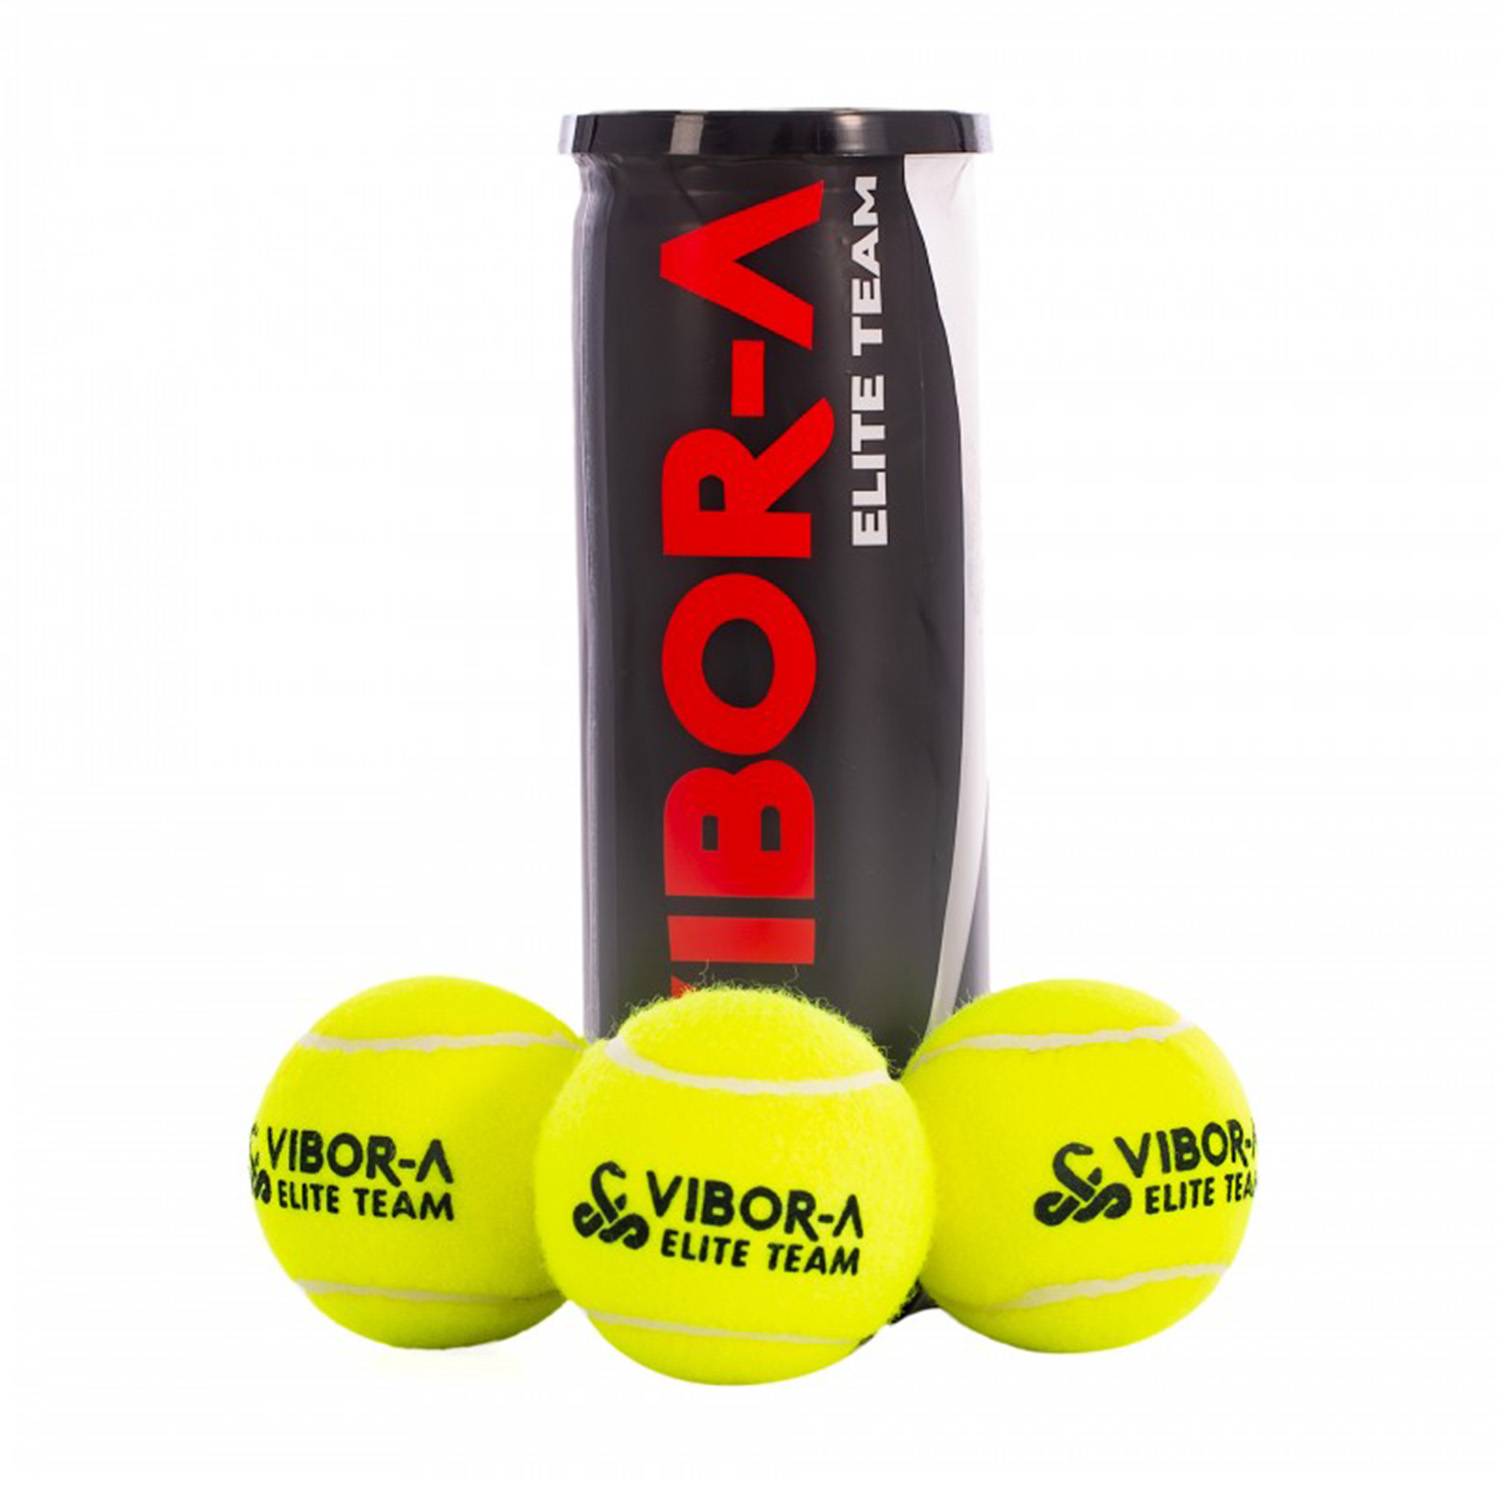 Vibor-A Elite Team - 3 Balls Can